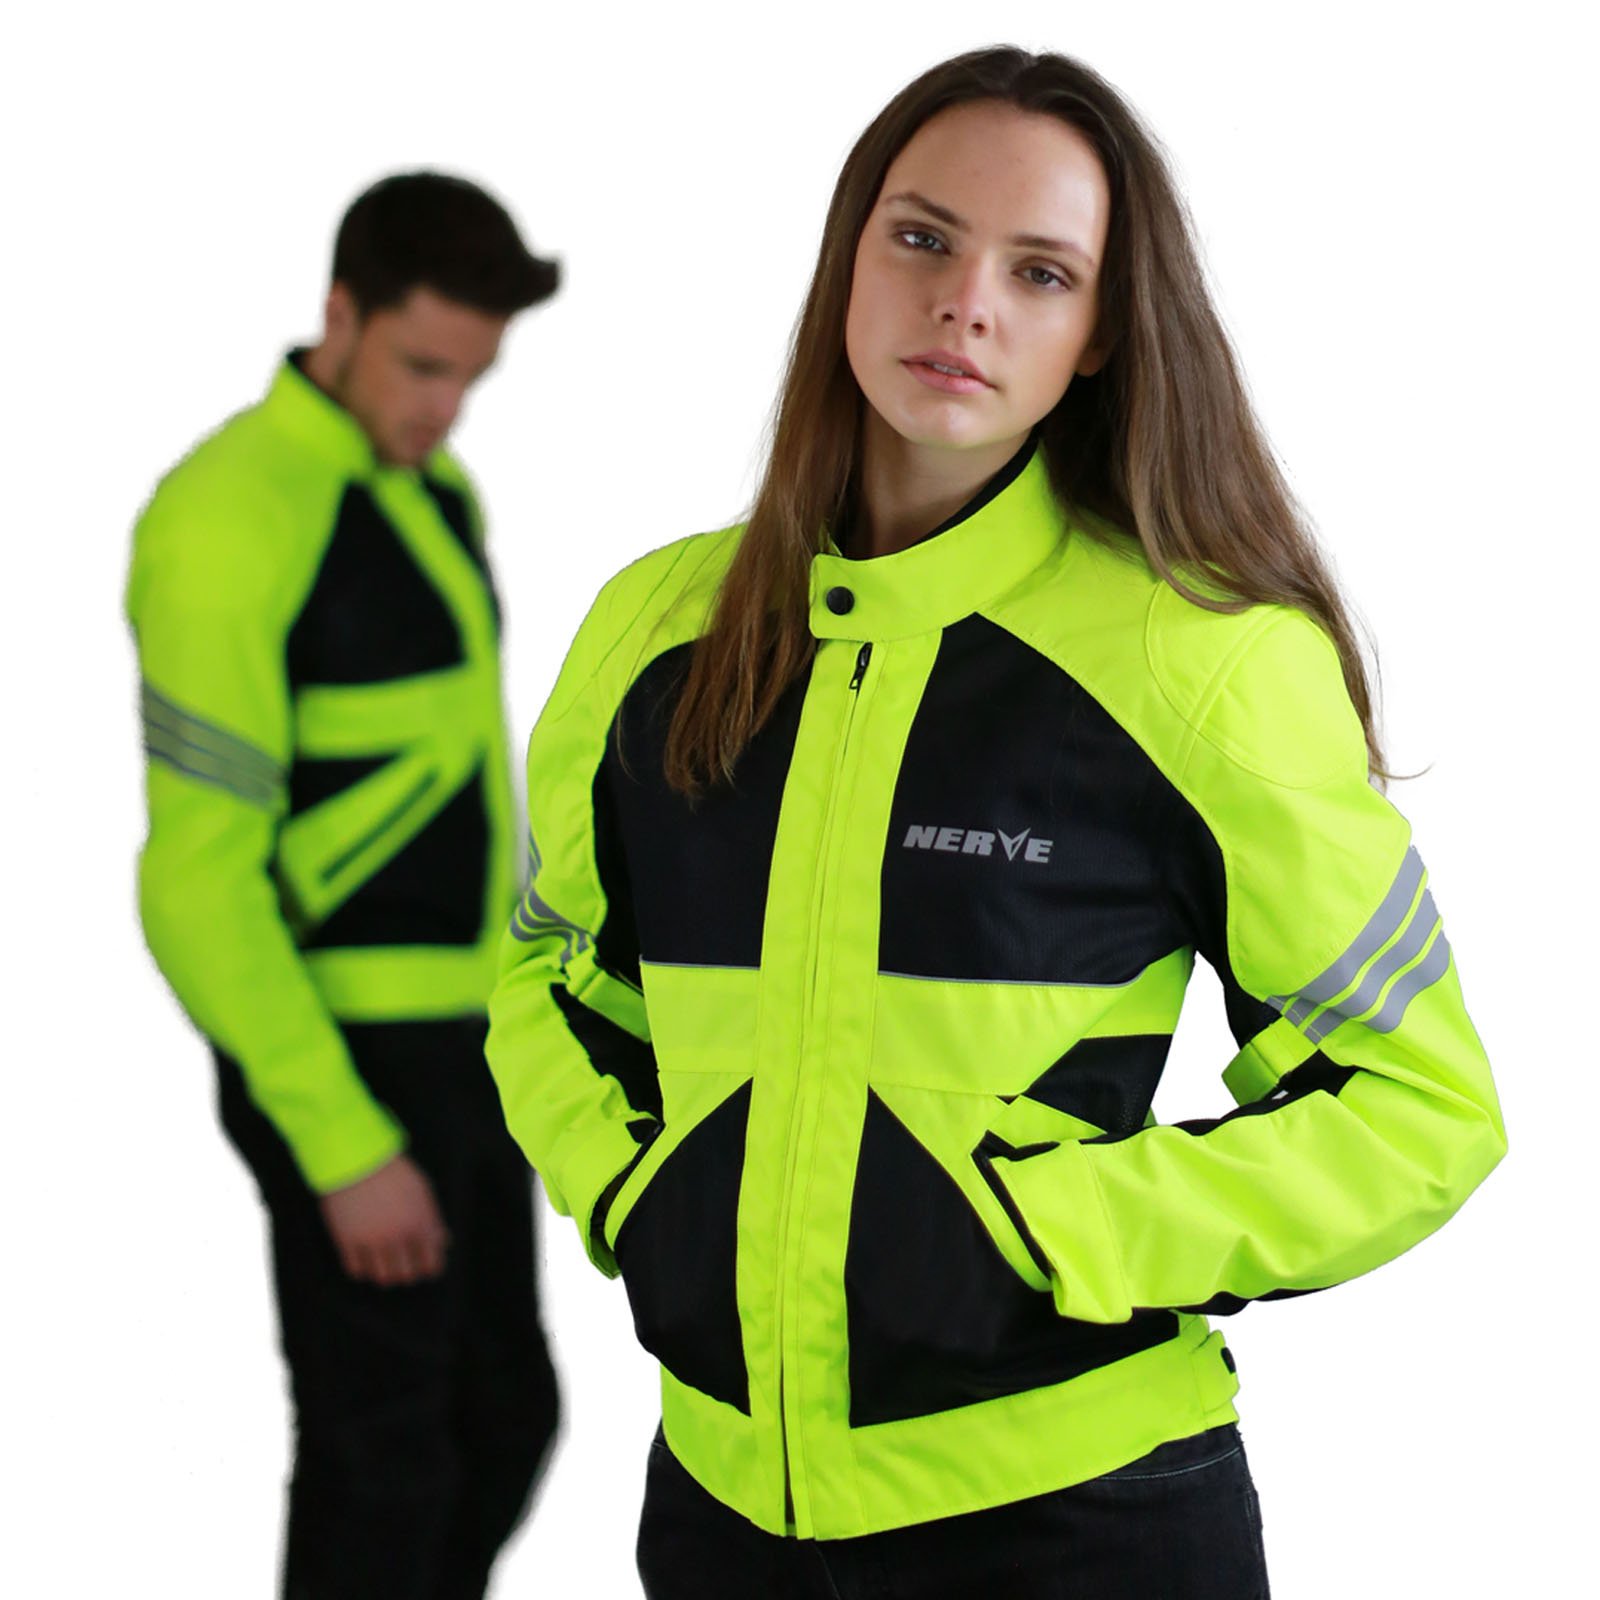 Nerve Shop Dünne Motorradjacke -Go- Motorrad Sommerjacke Protektorenjacke Damen Sommer Jacke Kurz Elegant Leicht Textil Mesh - schwarz-neon-grün-gelb - 3XL / XXXL